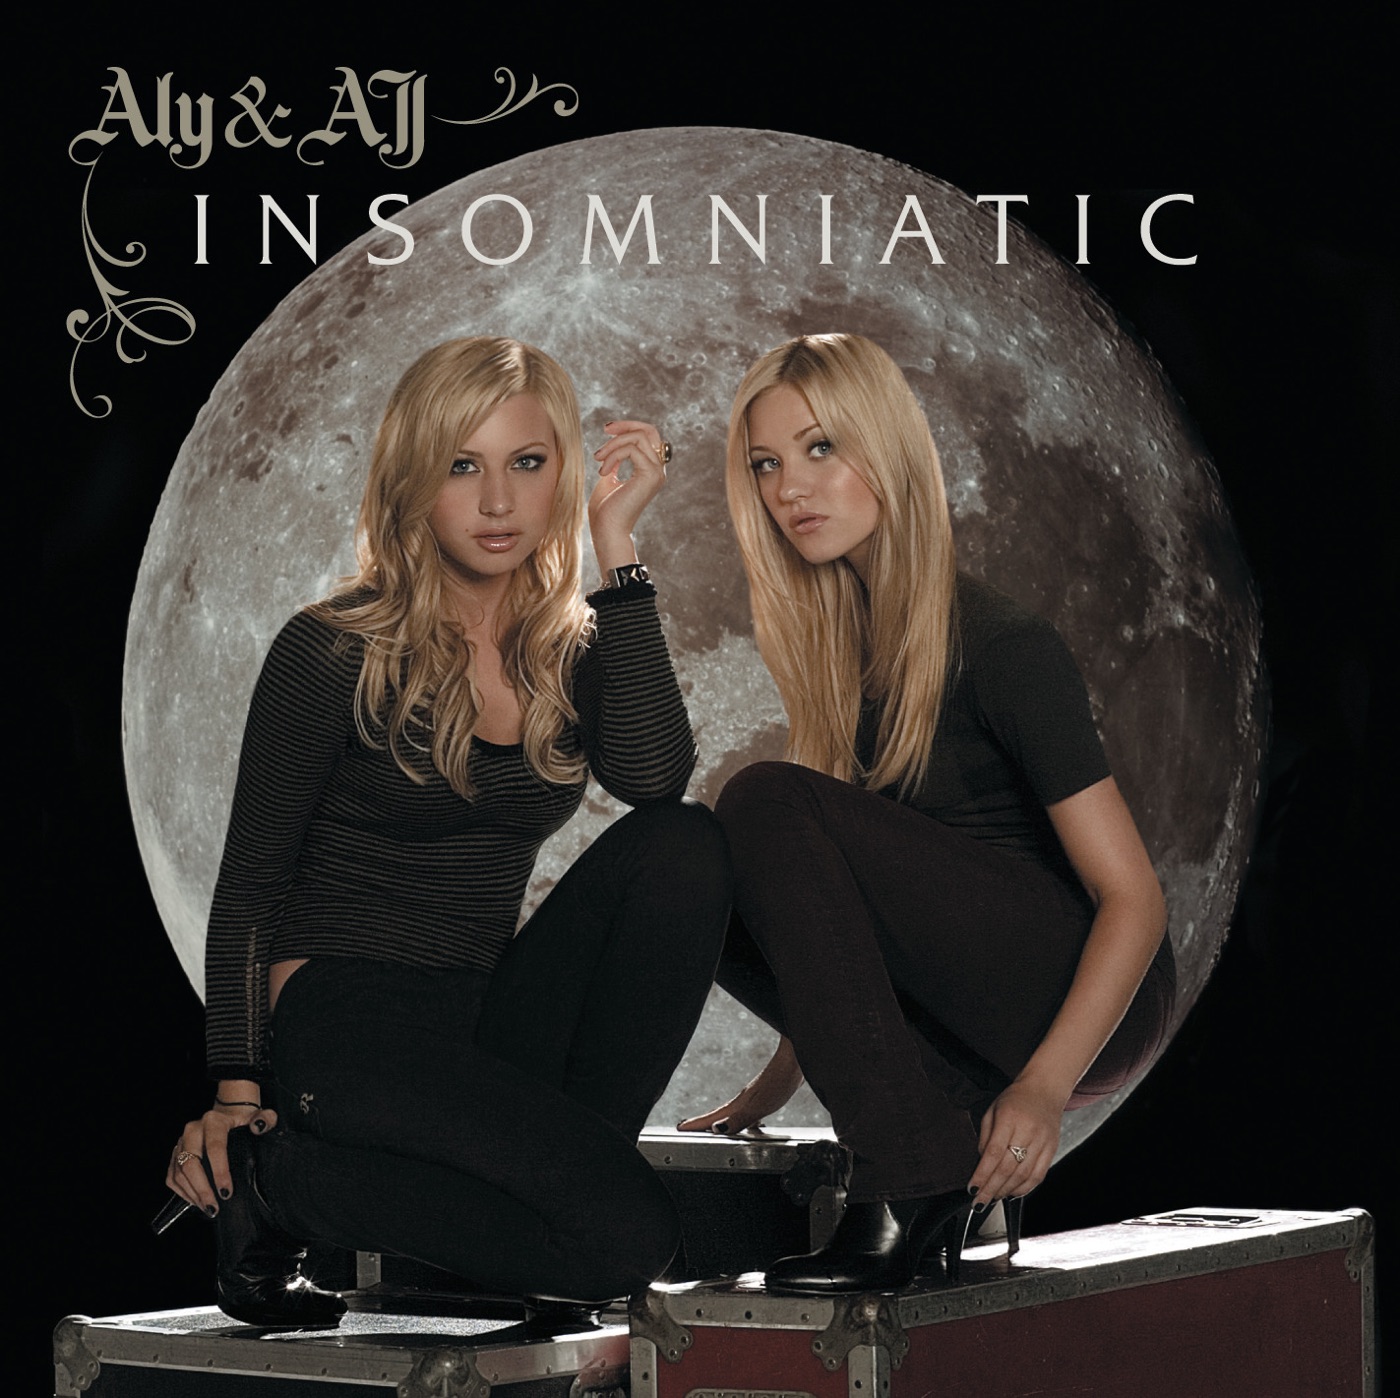 Insomniatic by Aly & AJ